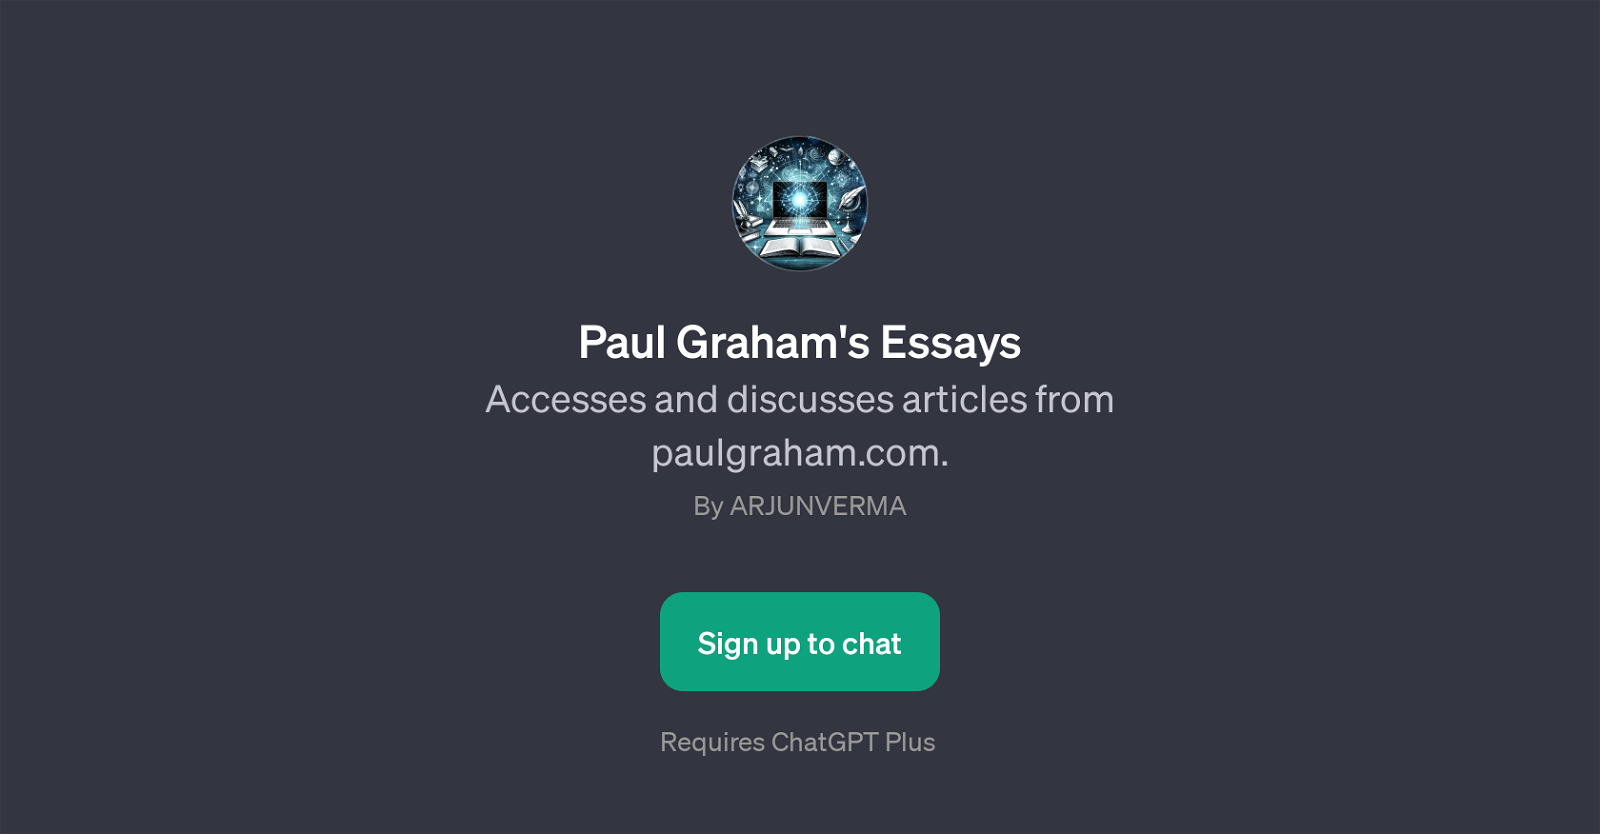 Paul Graham's Essays website